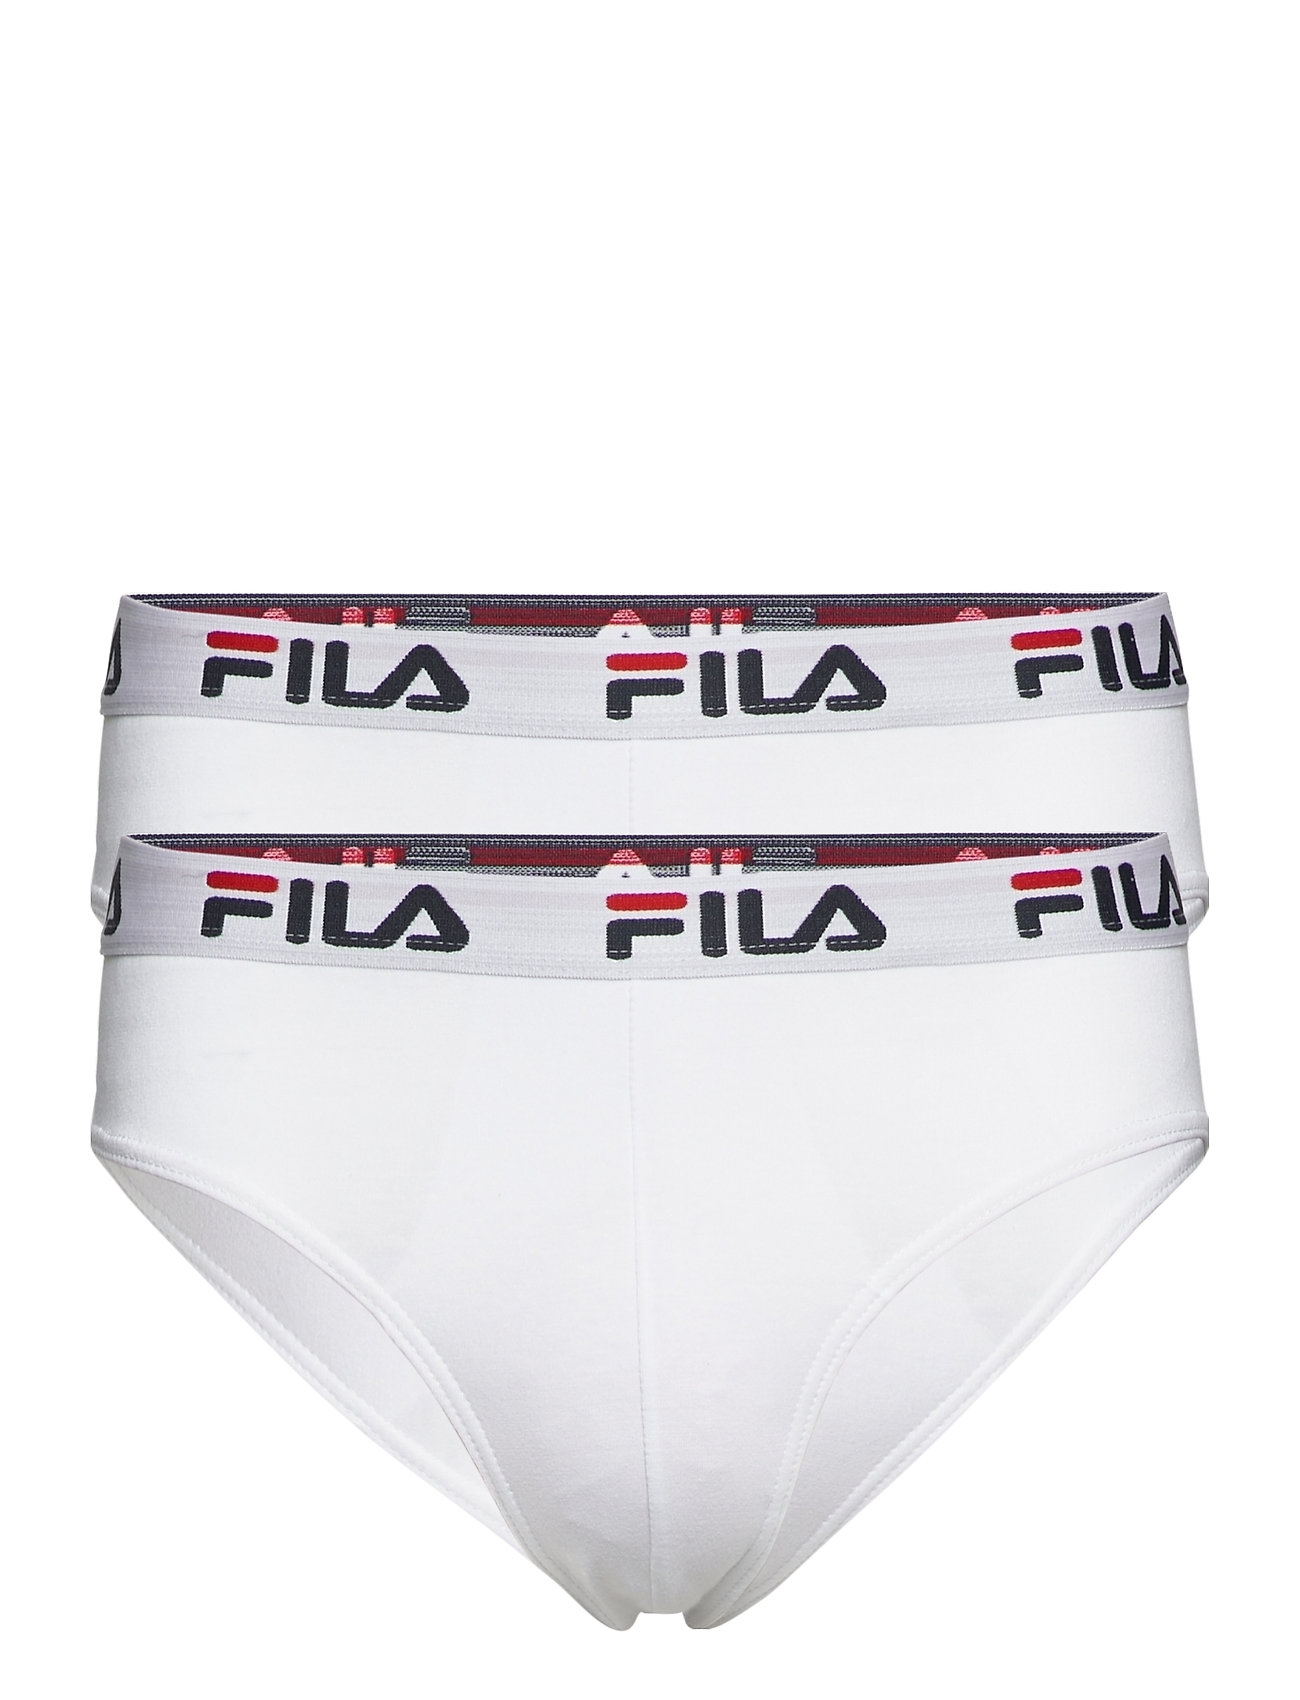 FILA underwear Boxer – underpants – shop at Booztlet